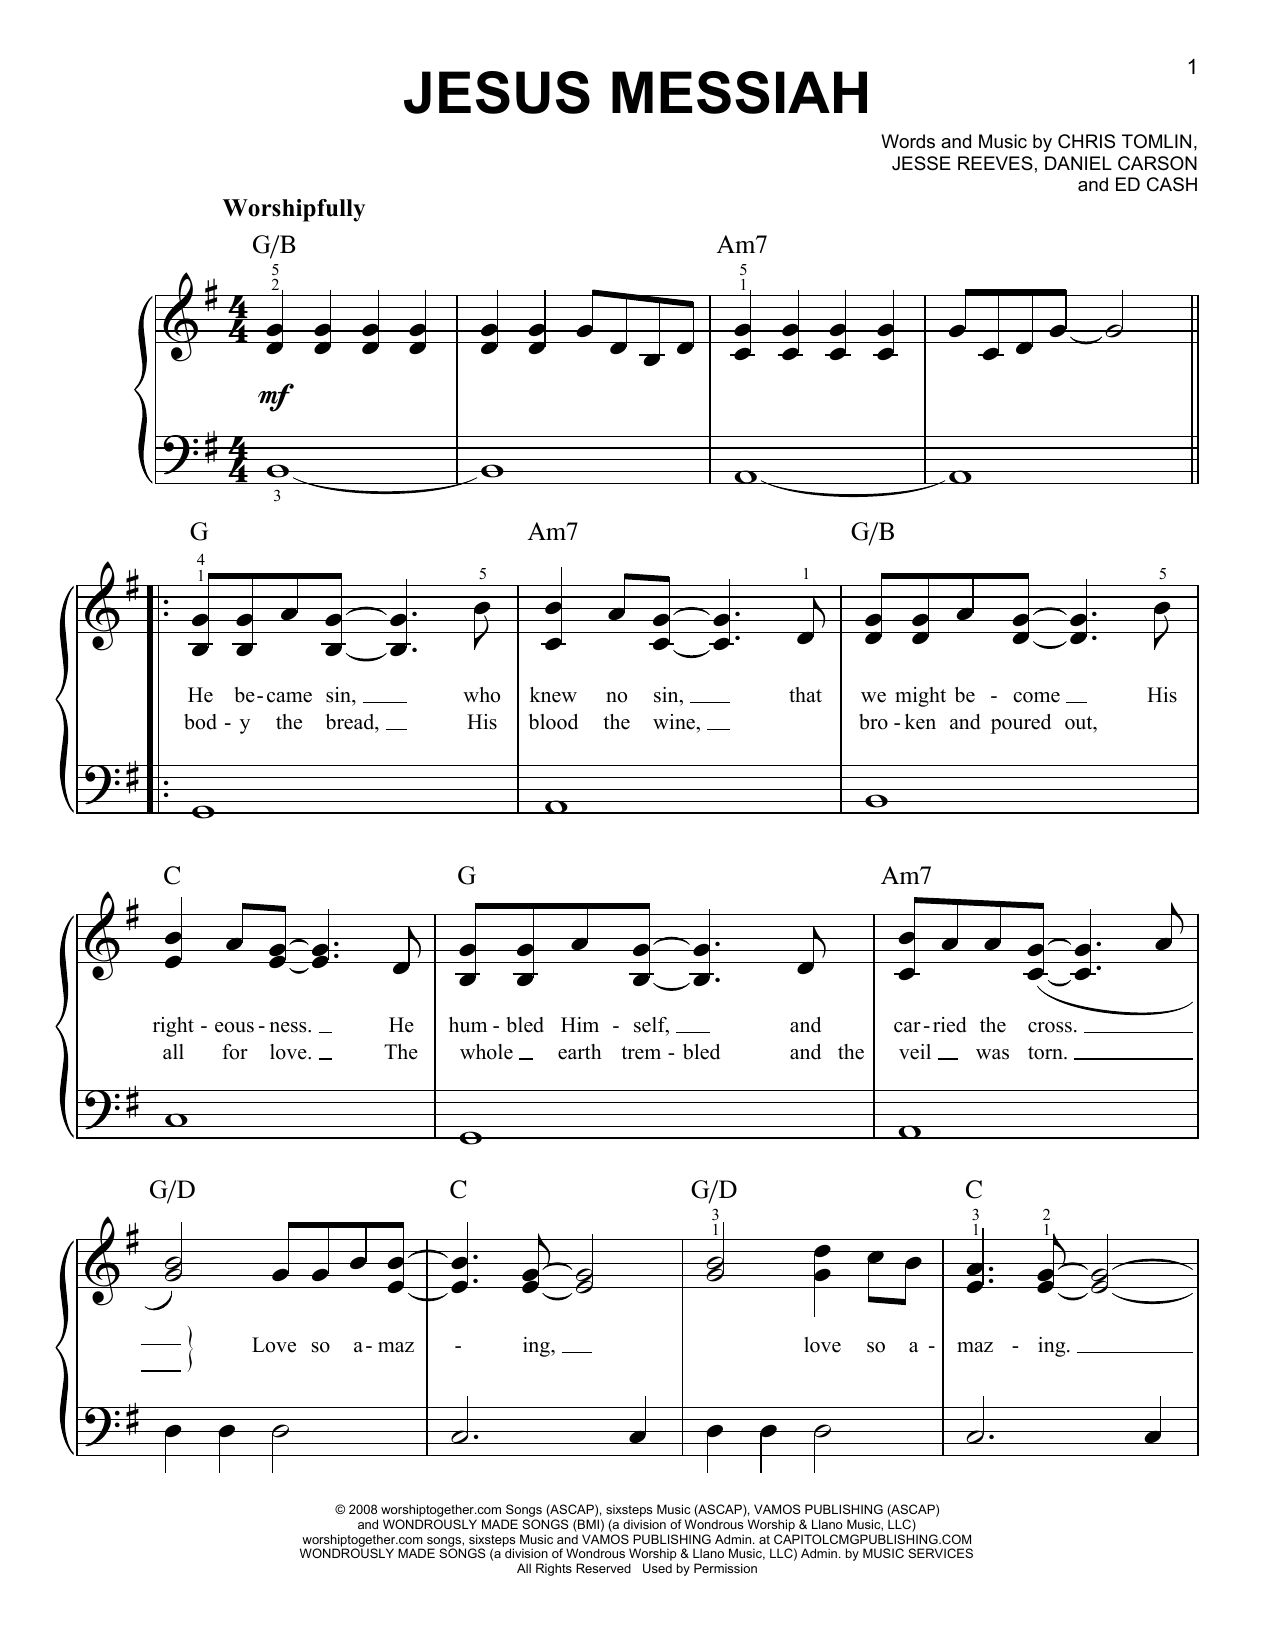 Chris Tomlin Jesus Messiah Sheet Music Notes & Chords for Violin Solo - Download or Print PDF